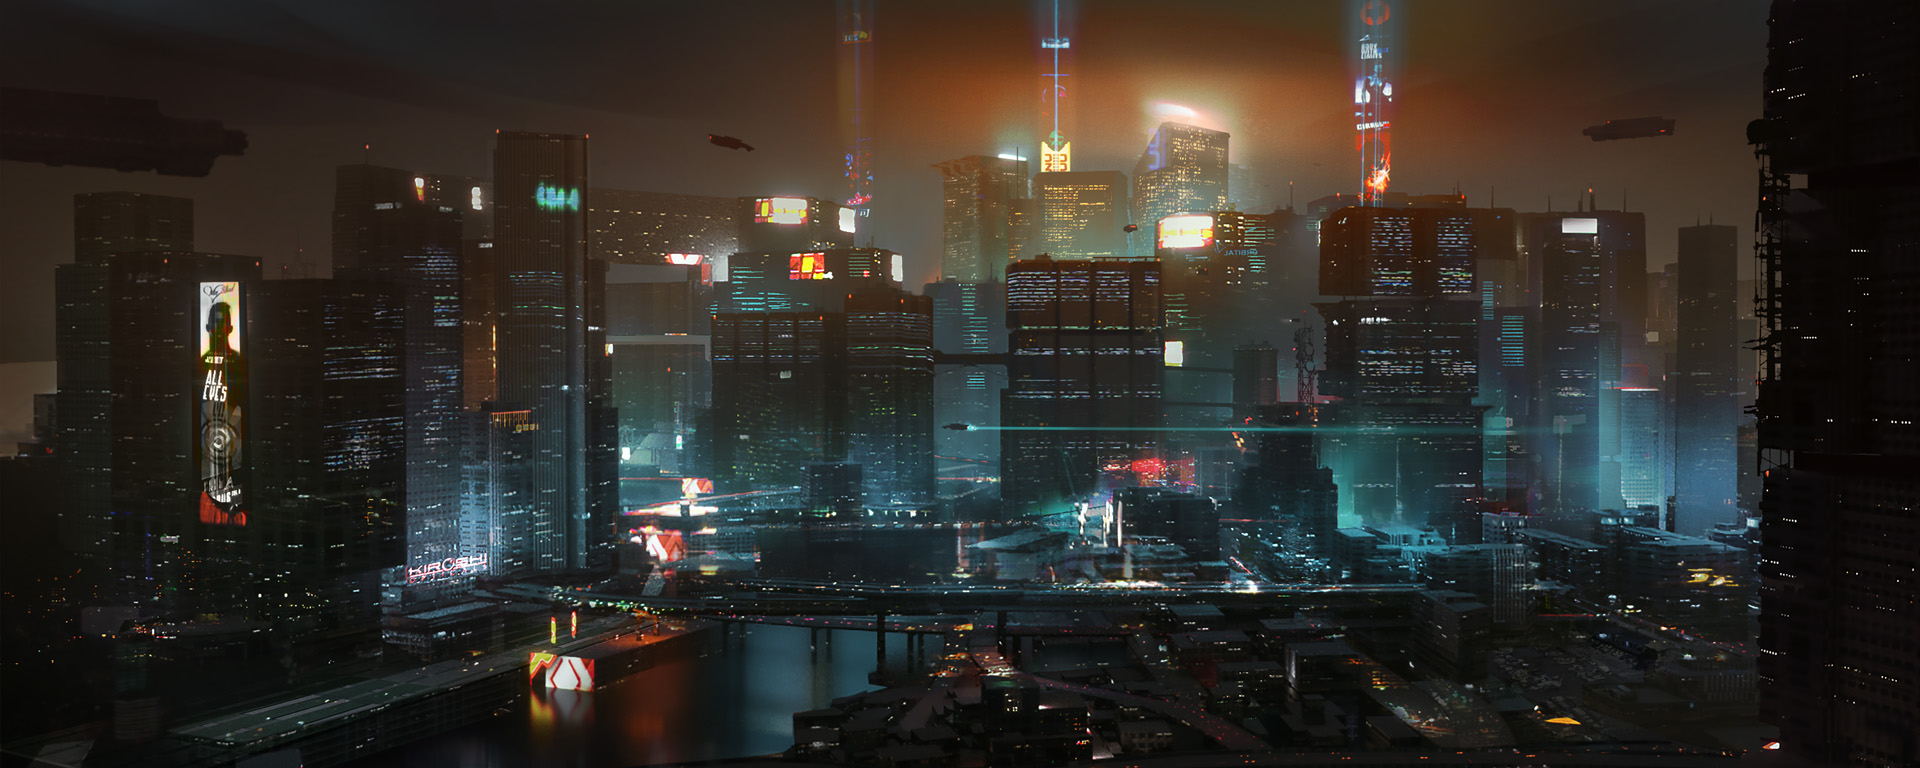 Cyberpunk 2077 - Artwork Screenshots